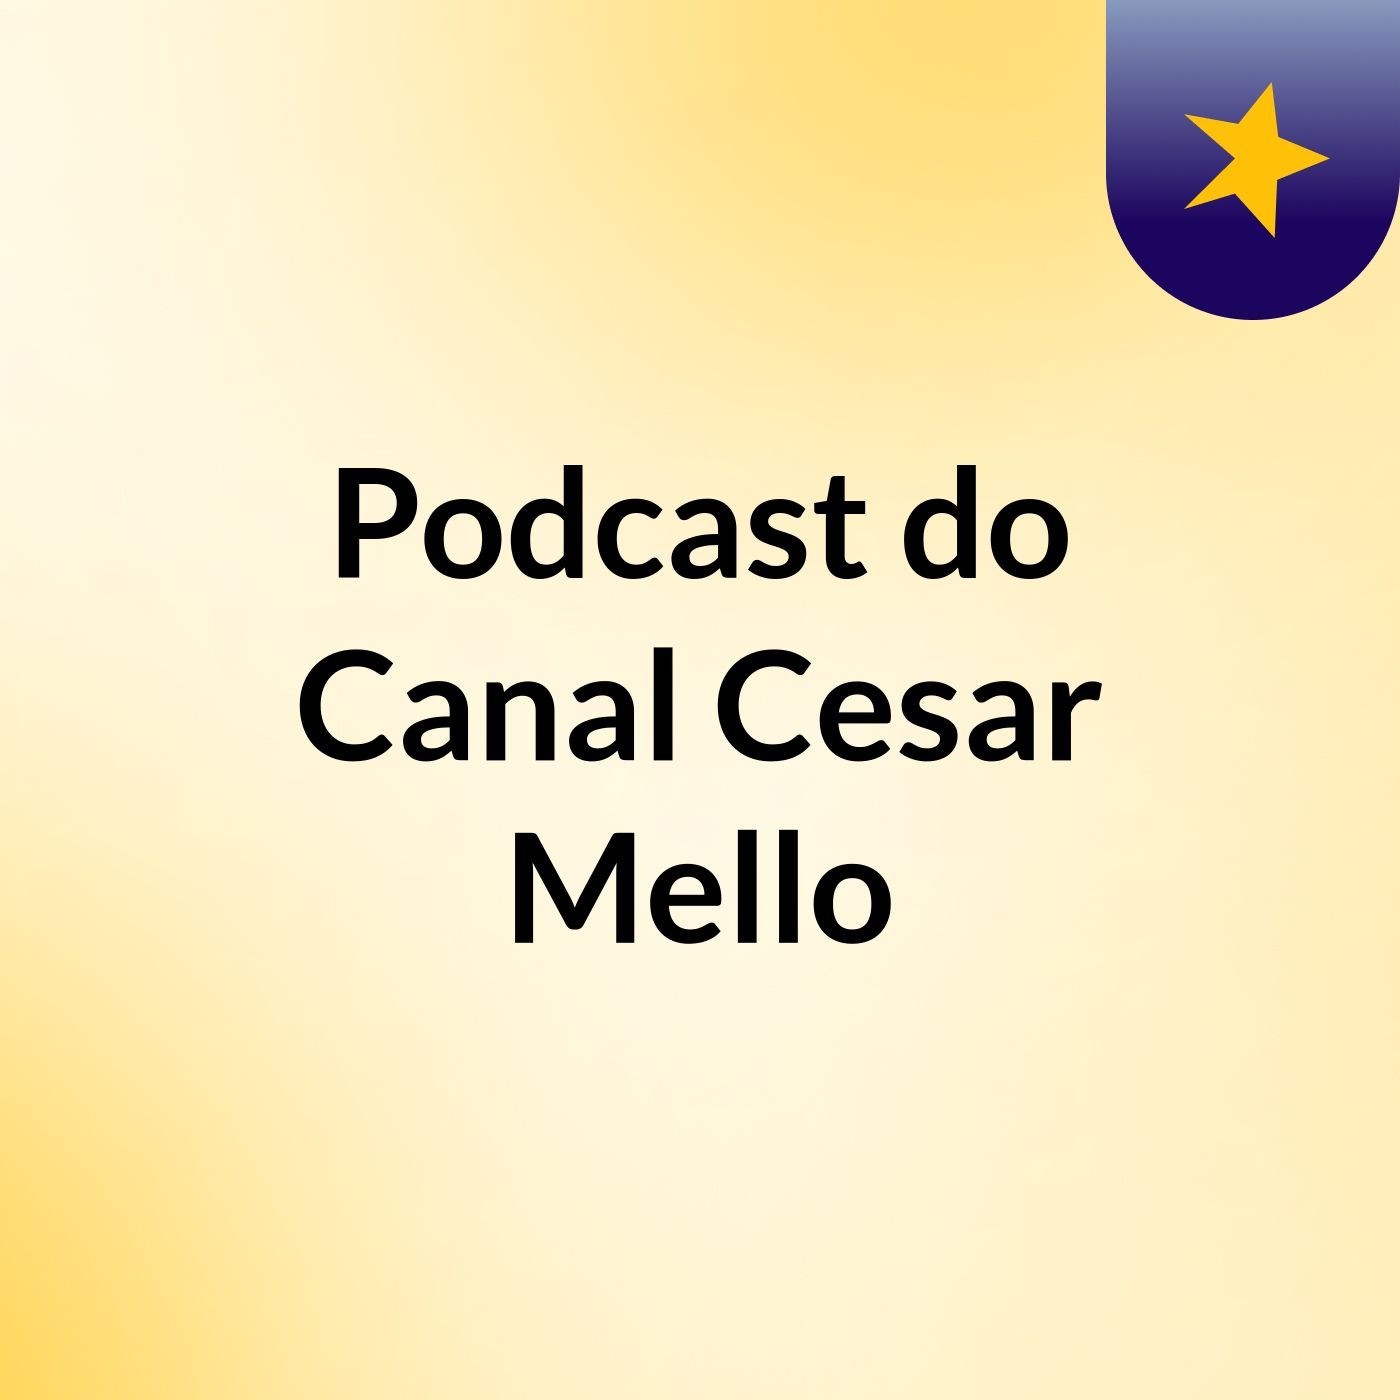 Podcast do Canal Cesar Mello